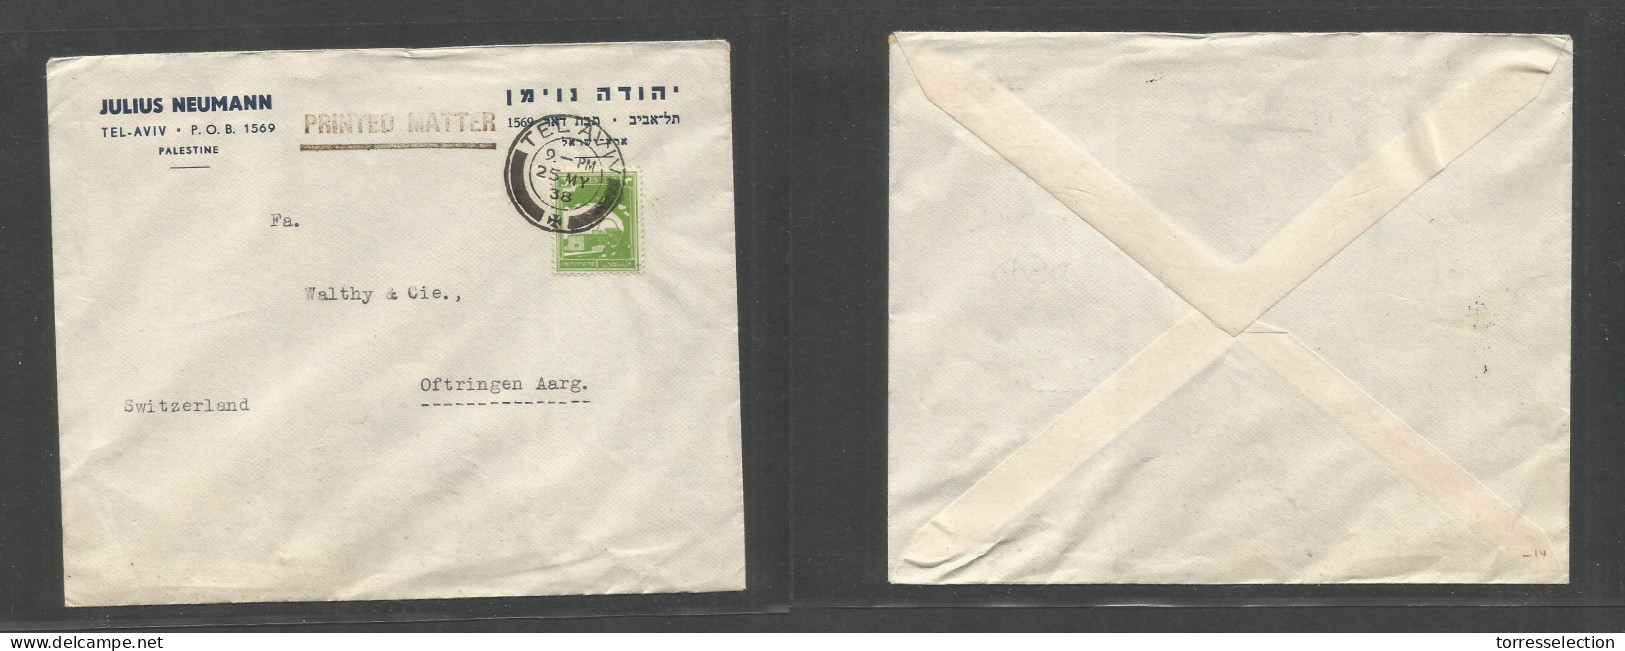 PALESTINE. 1938 (25 May) Tel Aviv - Switzerland, Oftringen Aargan. PM Rate Unsealed Comercial Bilingual Fkd Env, Cds. VF - Palestine